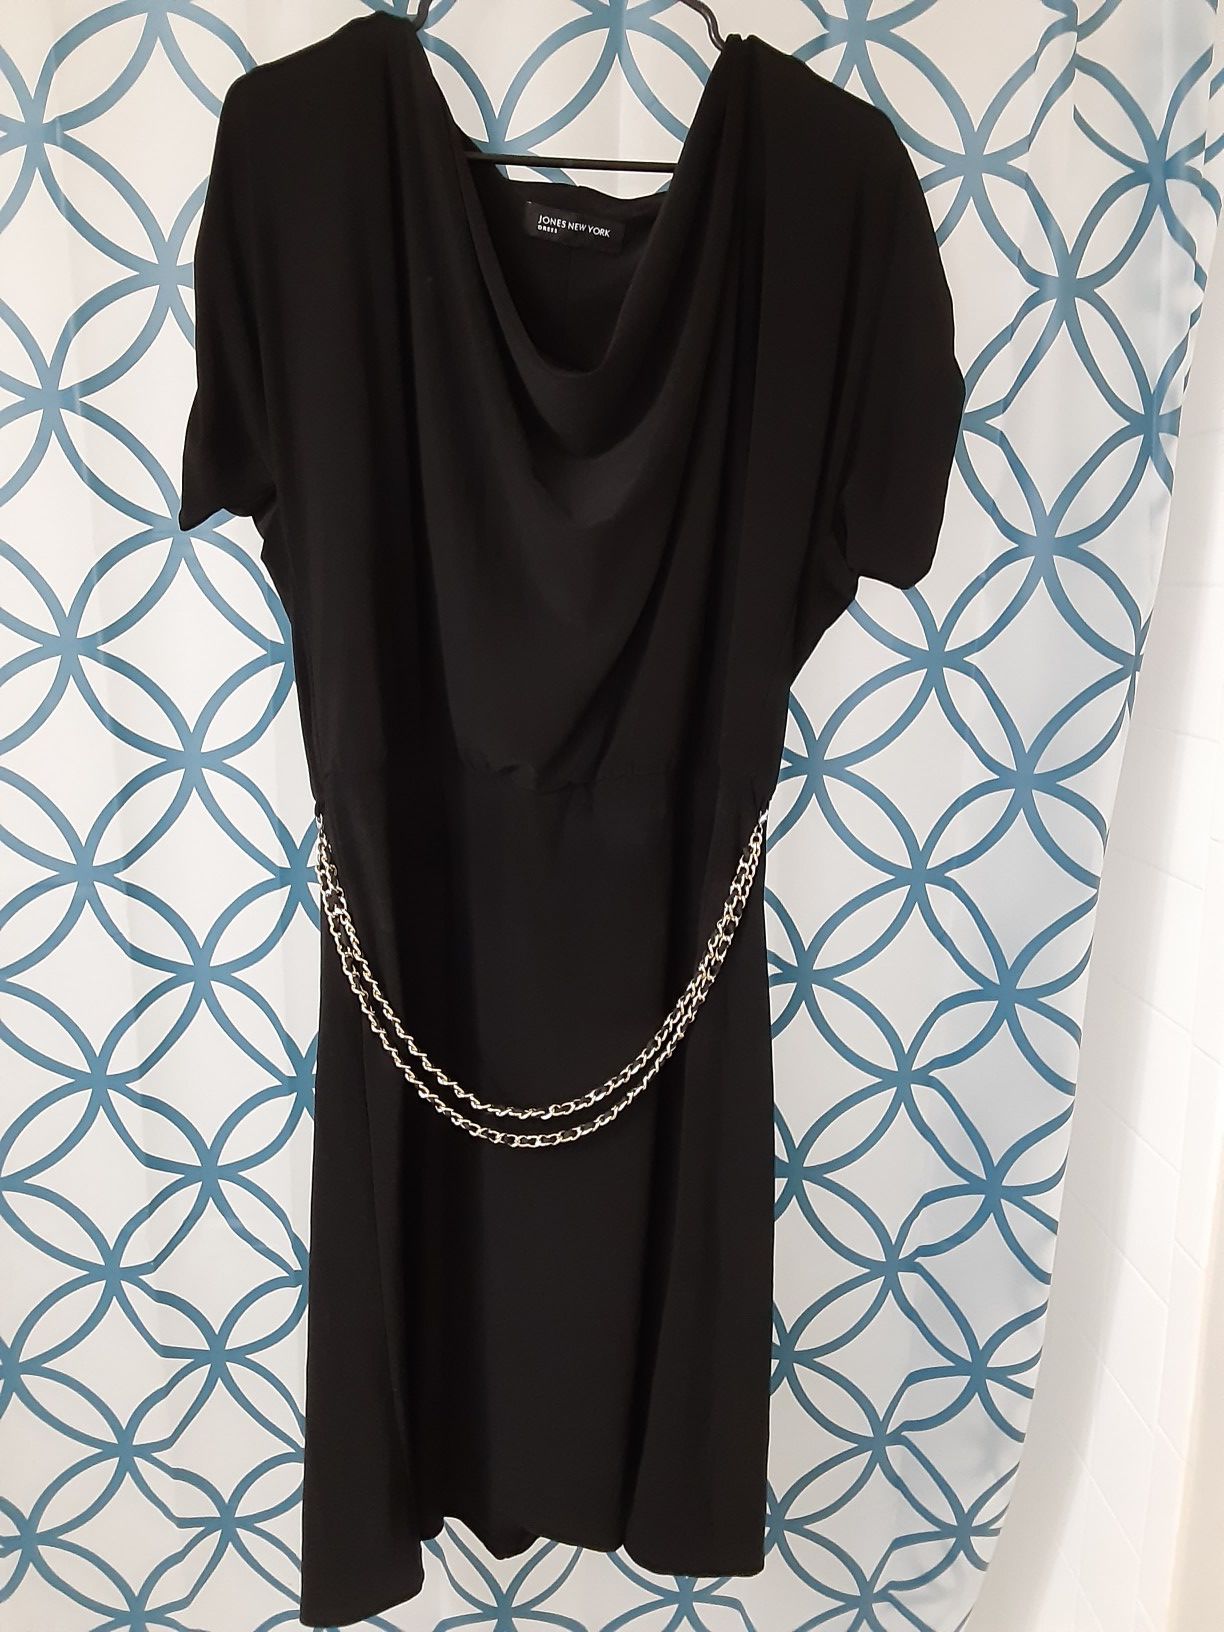 Womens Black Dress. Size 14